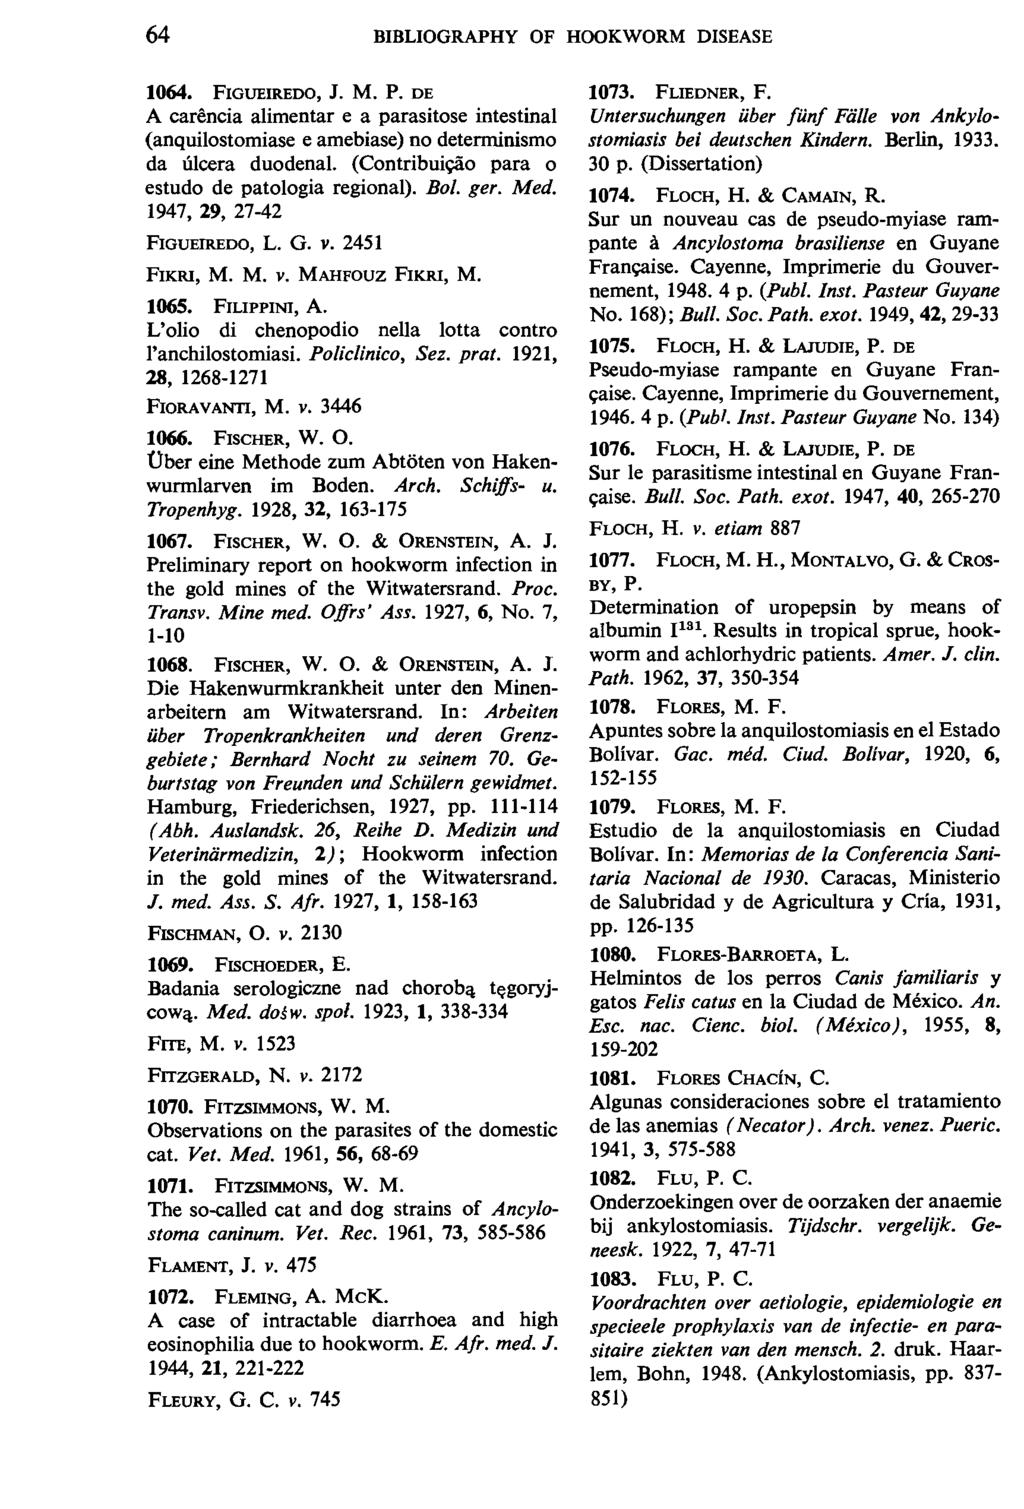 64 BIBLIOGRAPHY OF HOOKWORM DISEASE 1064. FIGUEIREDO, J. M. P. DE A carencia alimentar e a parasitose intestinal (anquilostomiase e amebiase) no determinismo da ulcera duodenal.